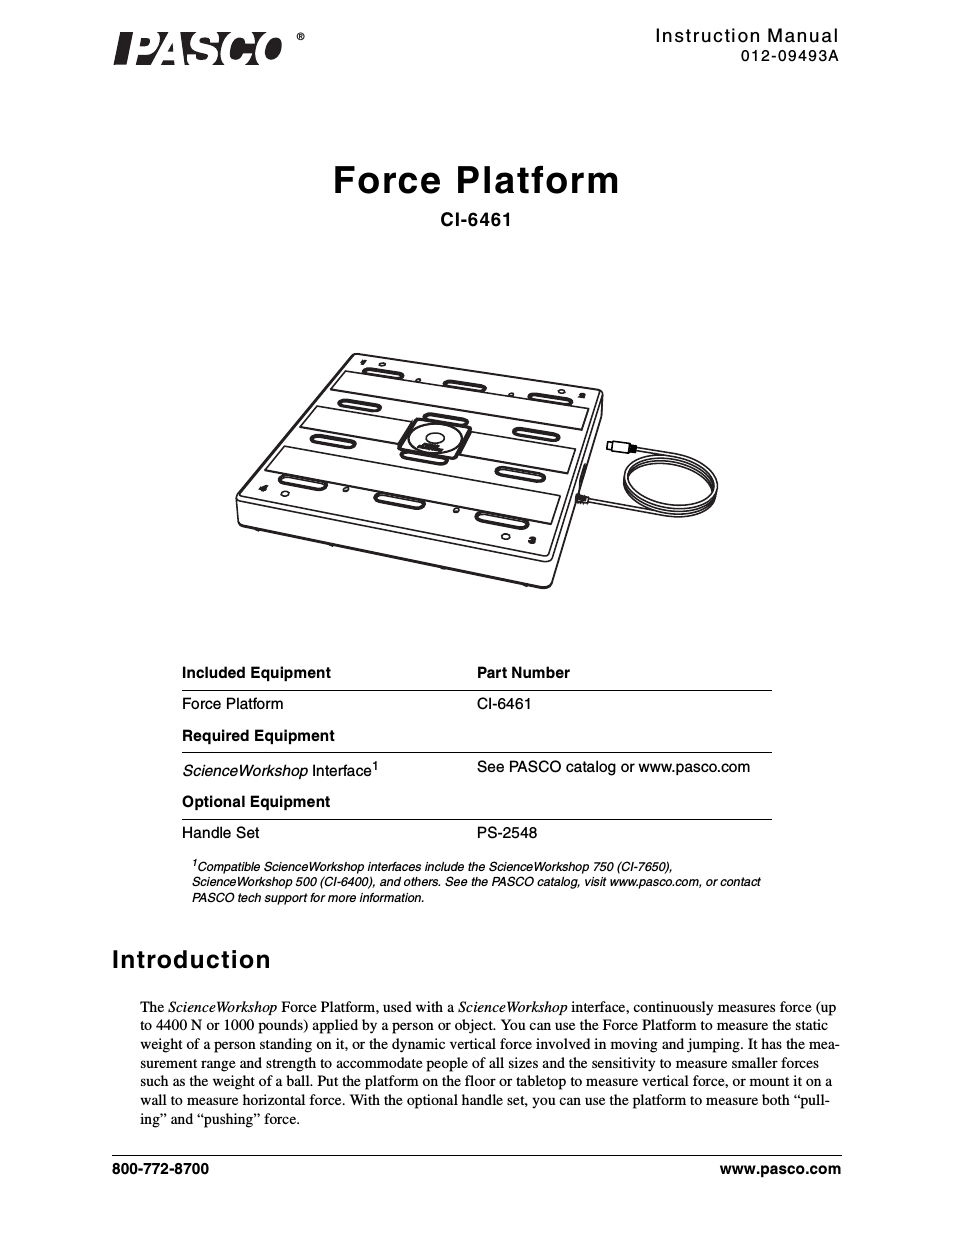 CI-6461 Force Platform